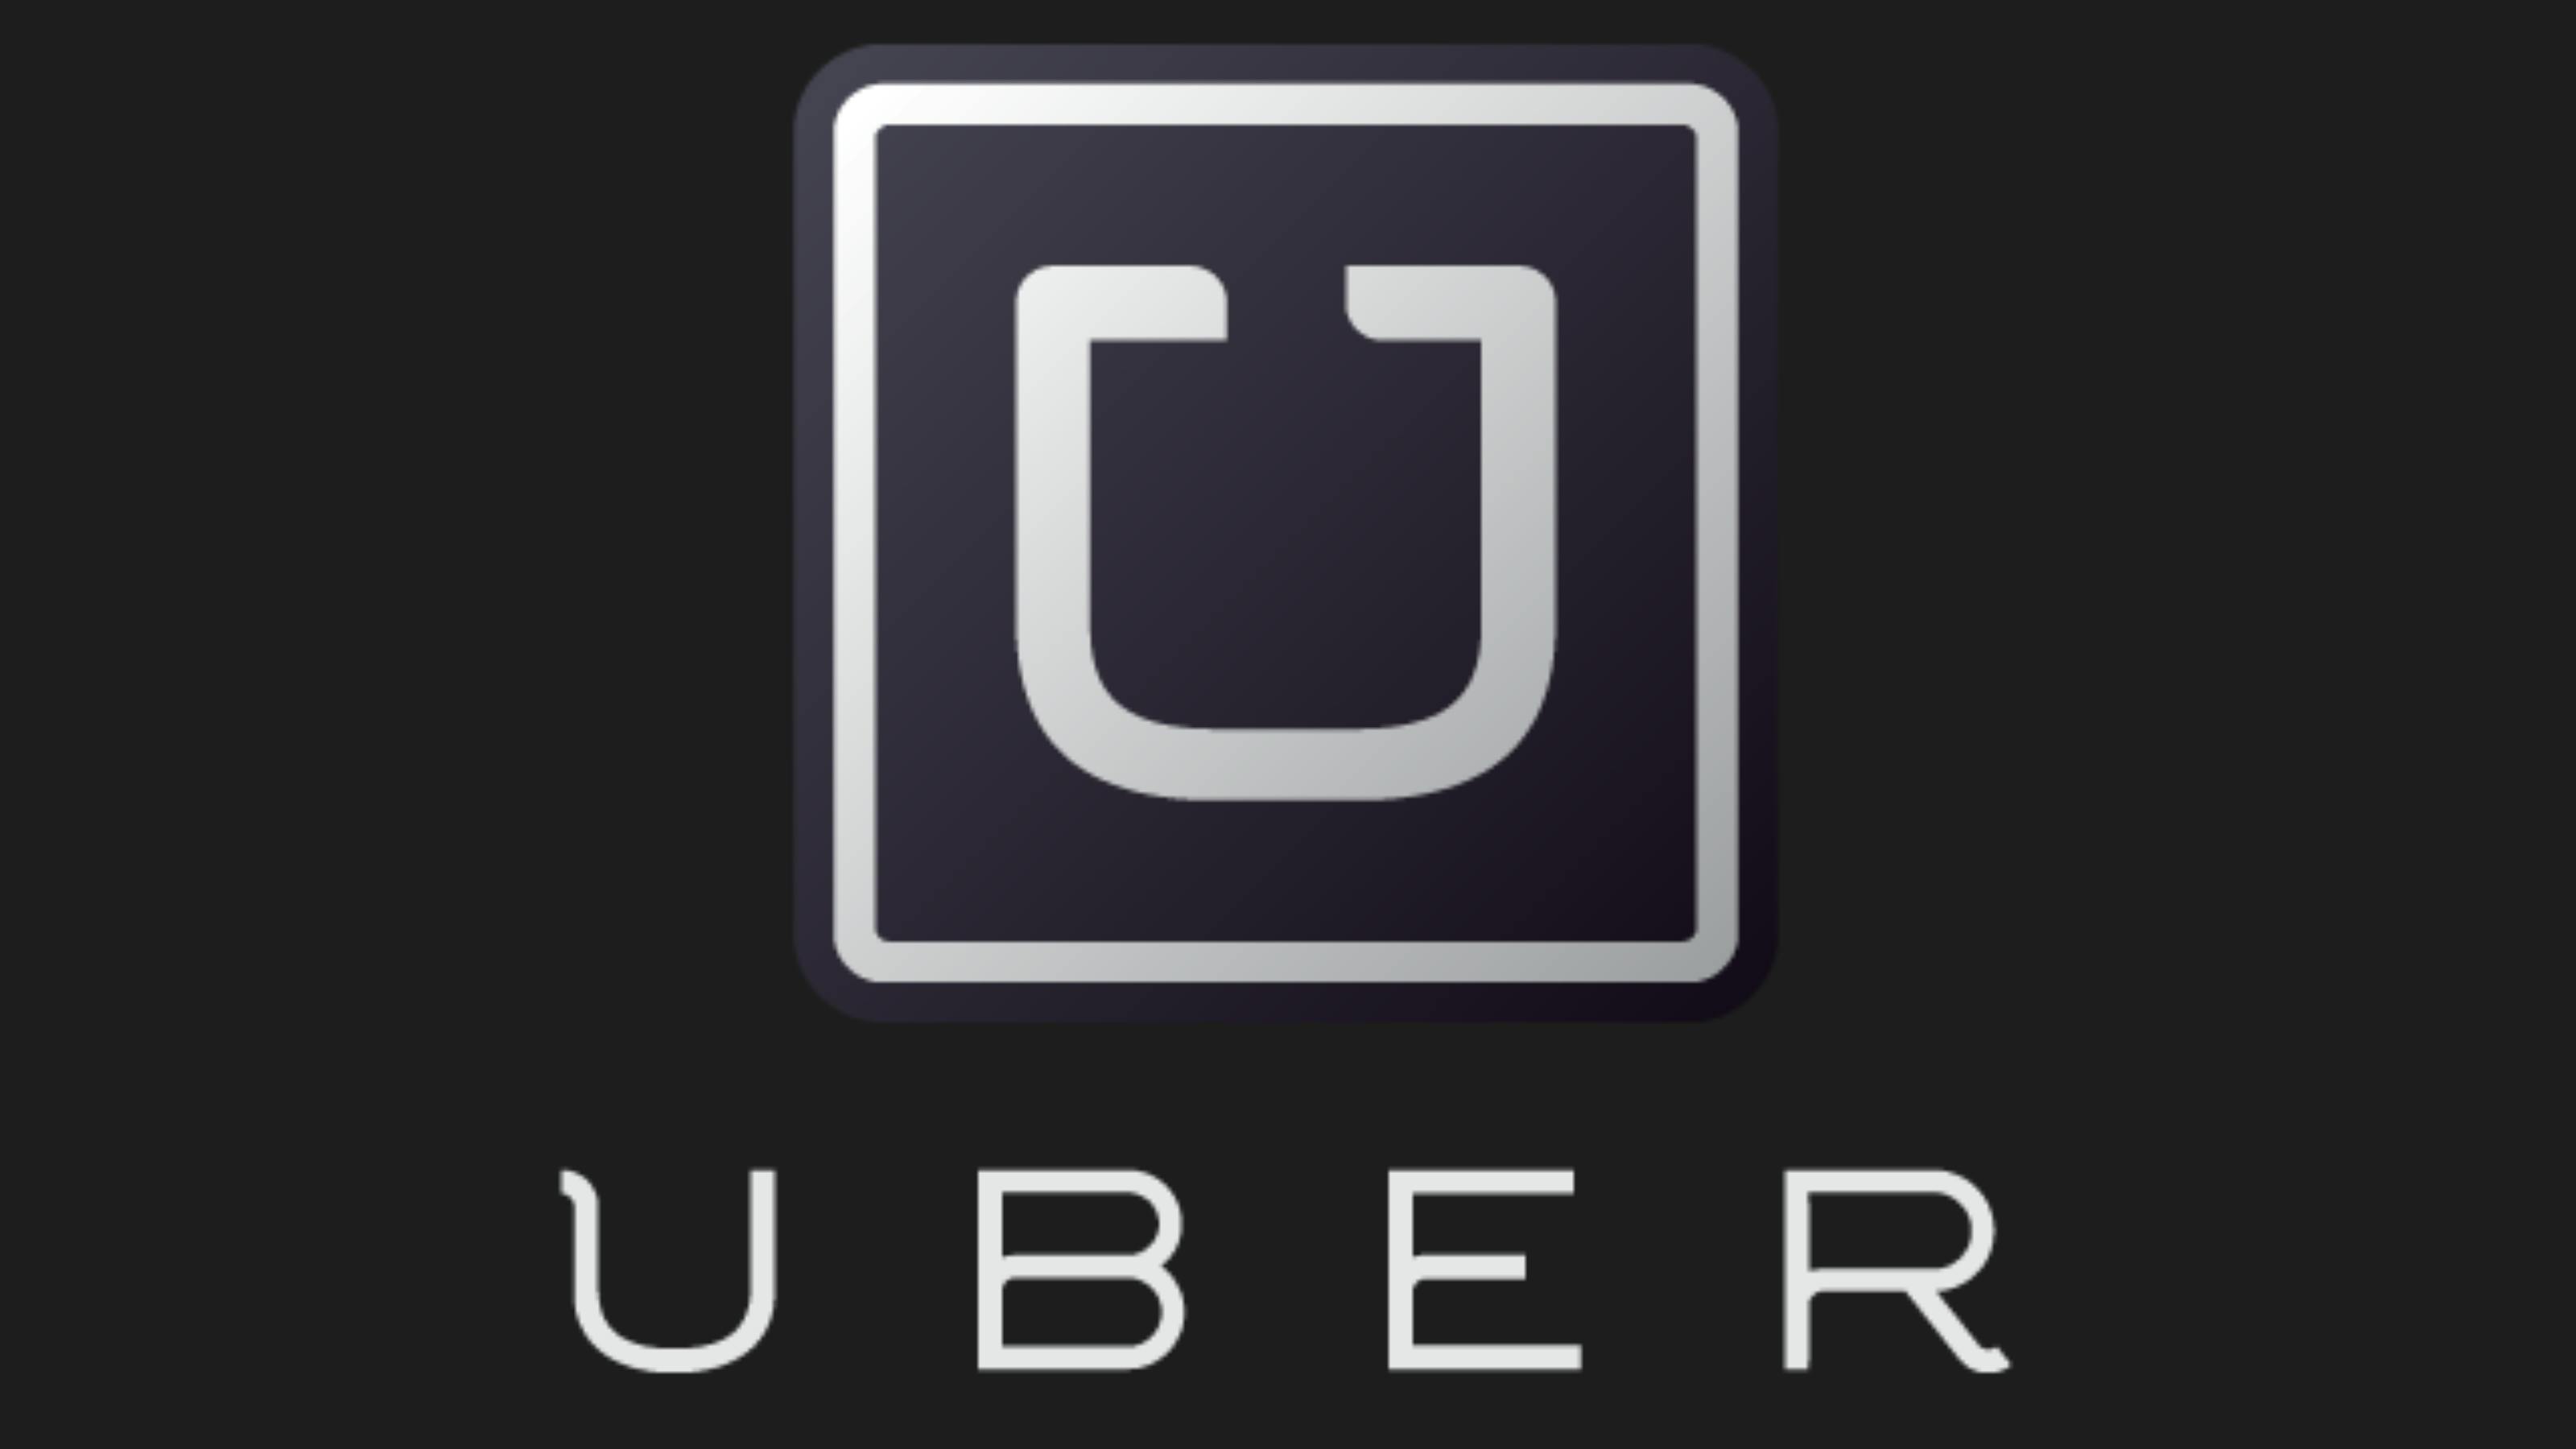 Uber's old logo